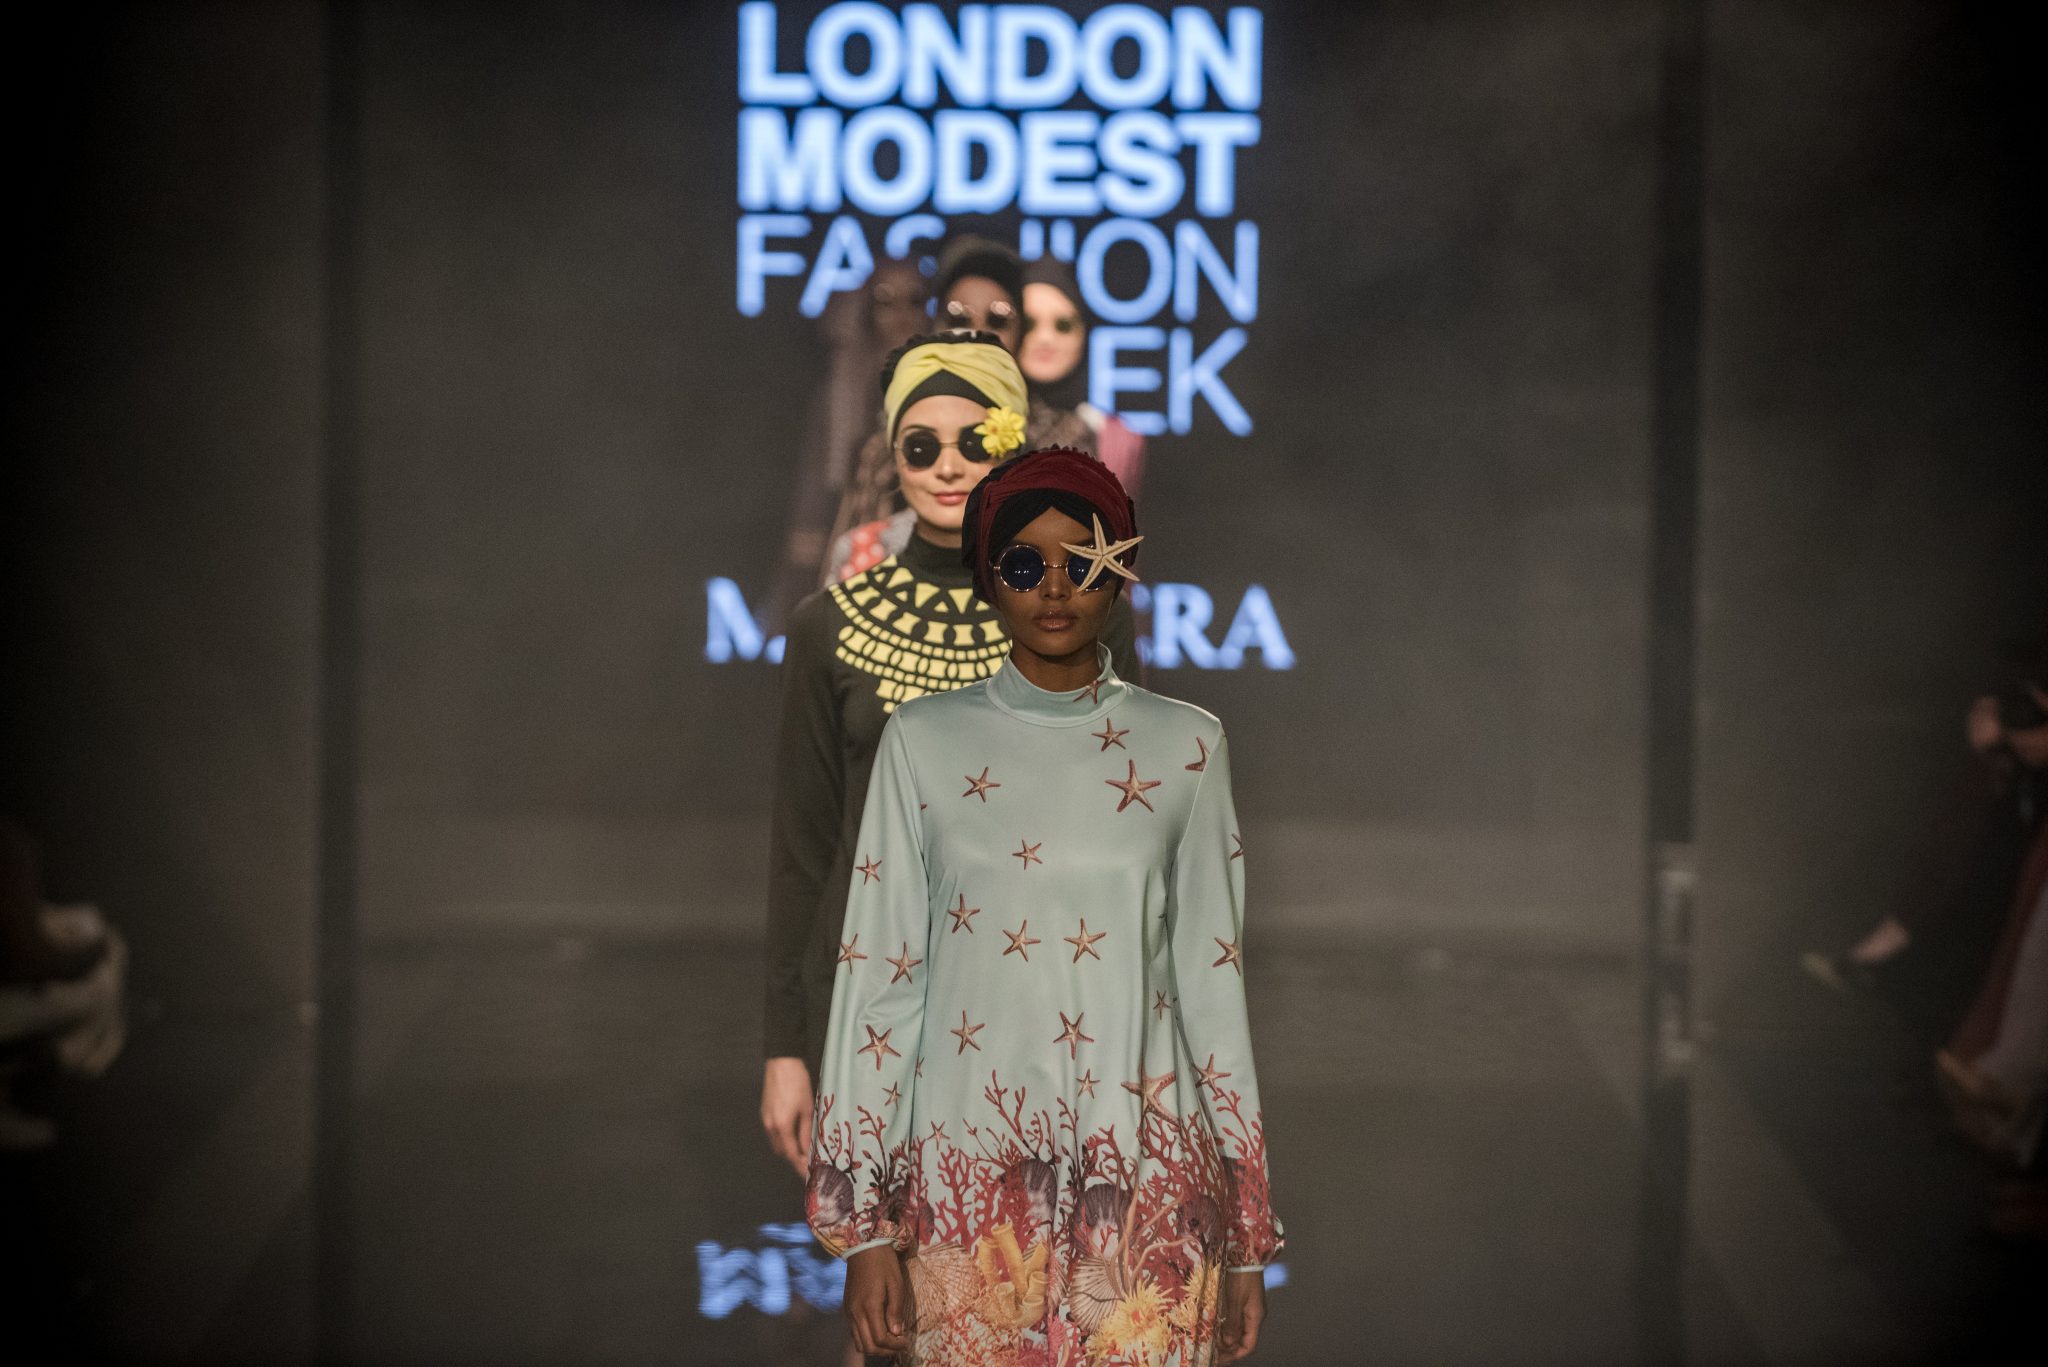 Modanisa London Modest Fashion Week 2017 - Melan Magazine